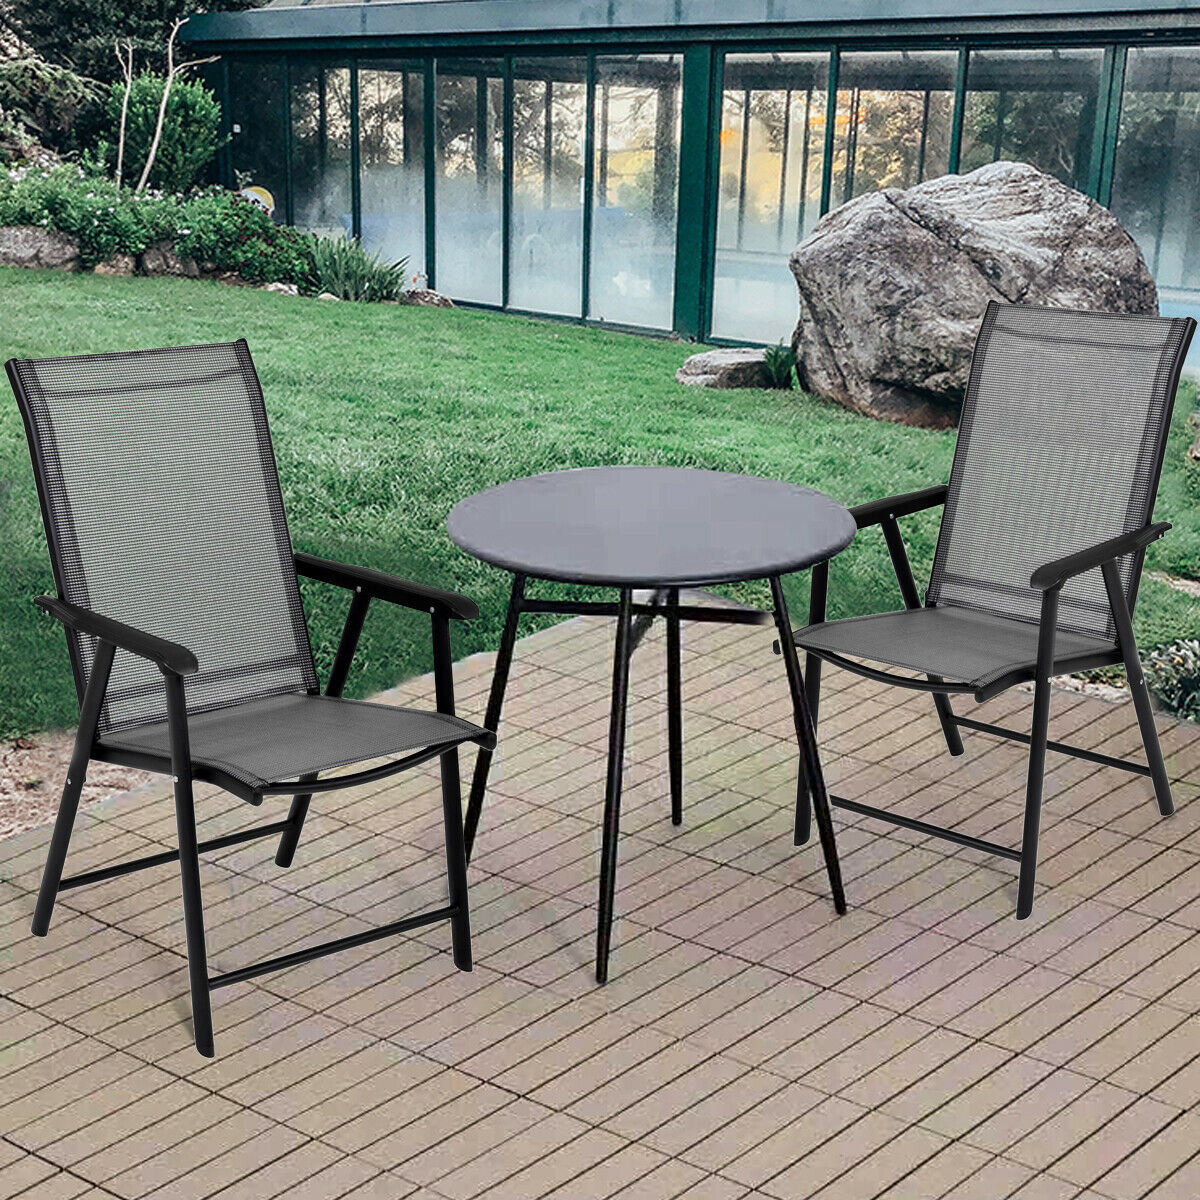 2PCS Folding Chairs Steel Frame Patio Garden Outdoor W/ Armrest & Footrest